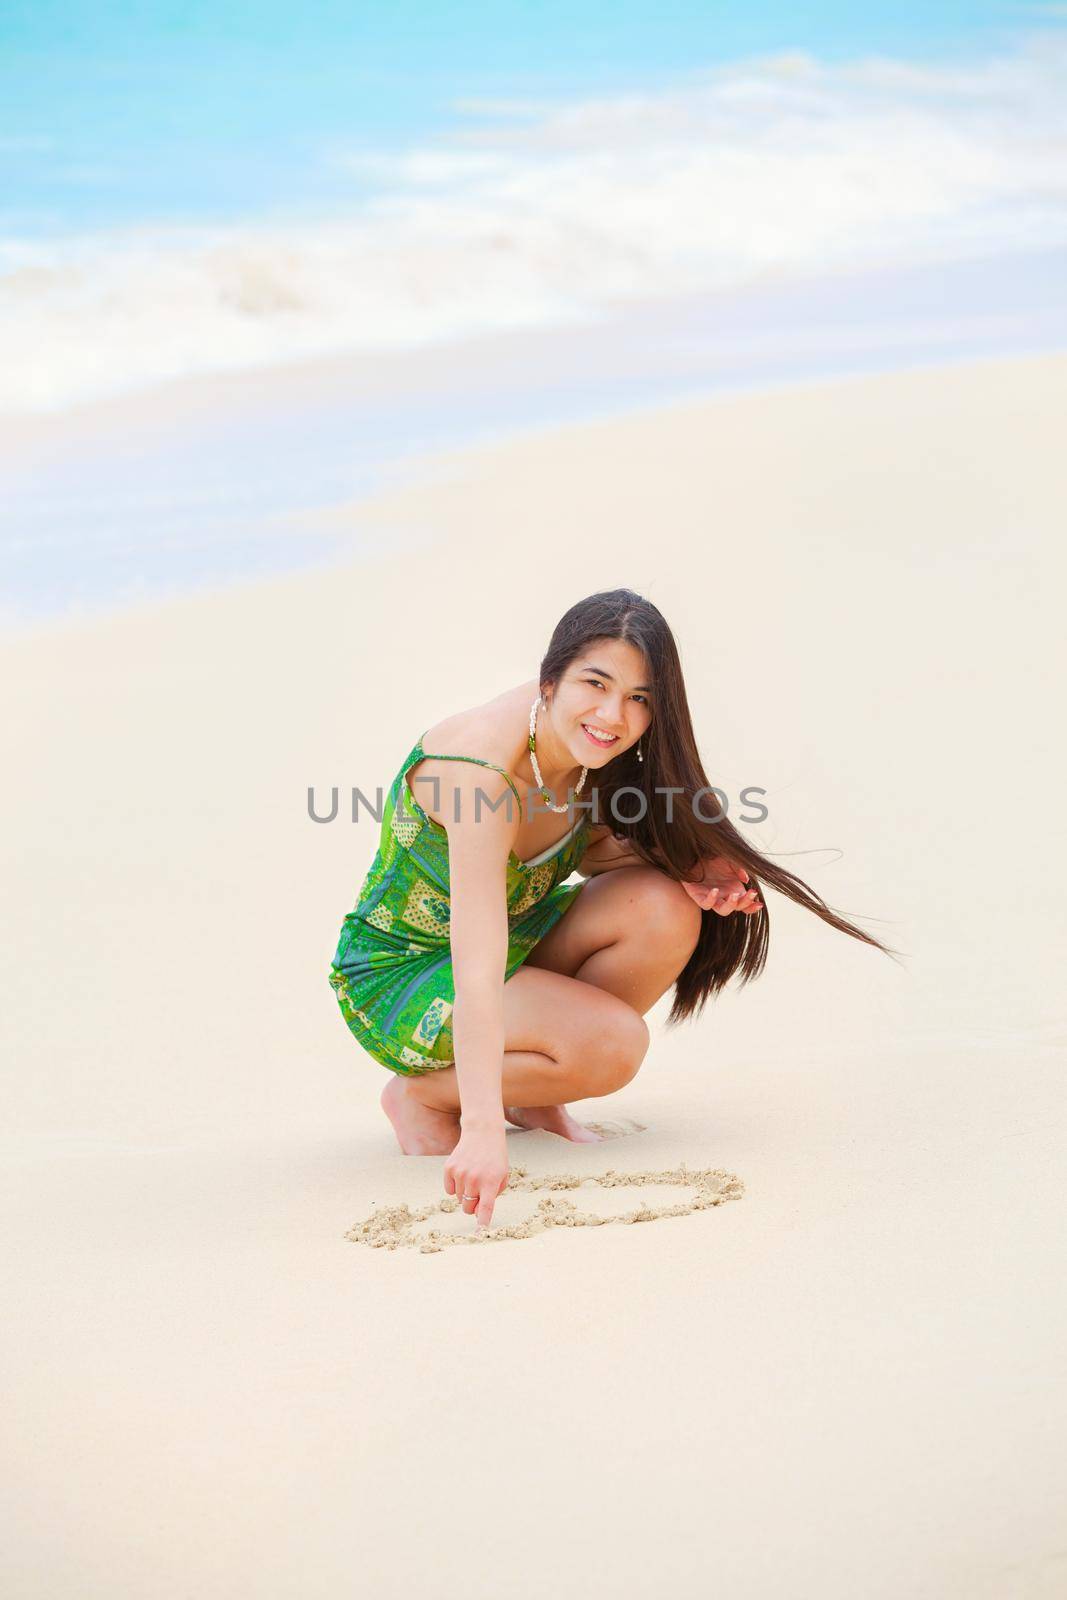 Beautiful teen girl drawing heart in sand on tropical beach by jarenwicklund